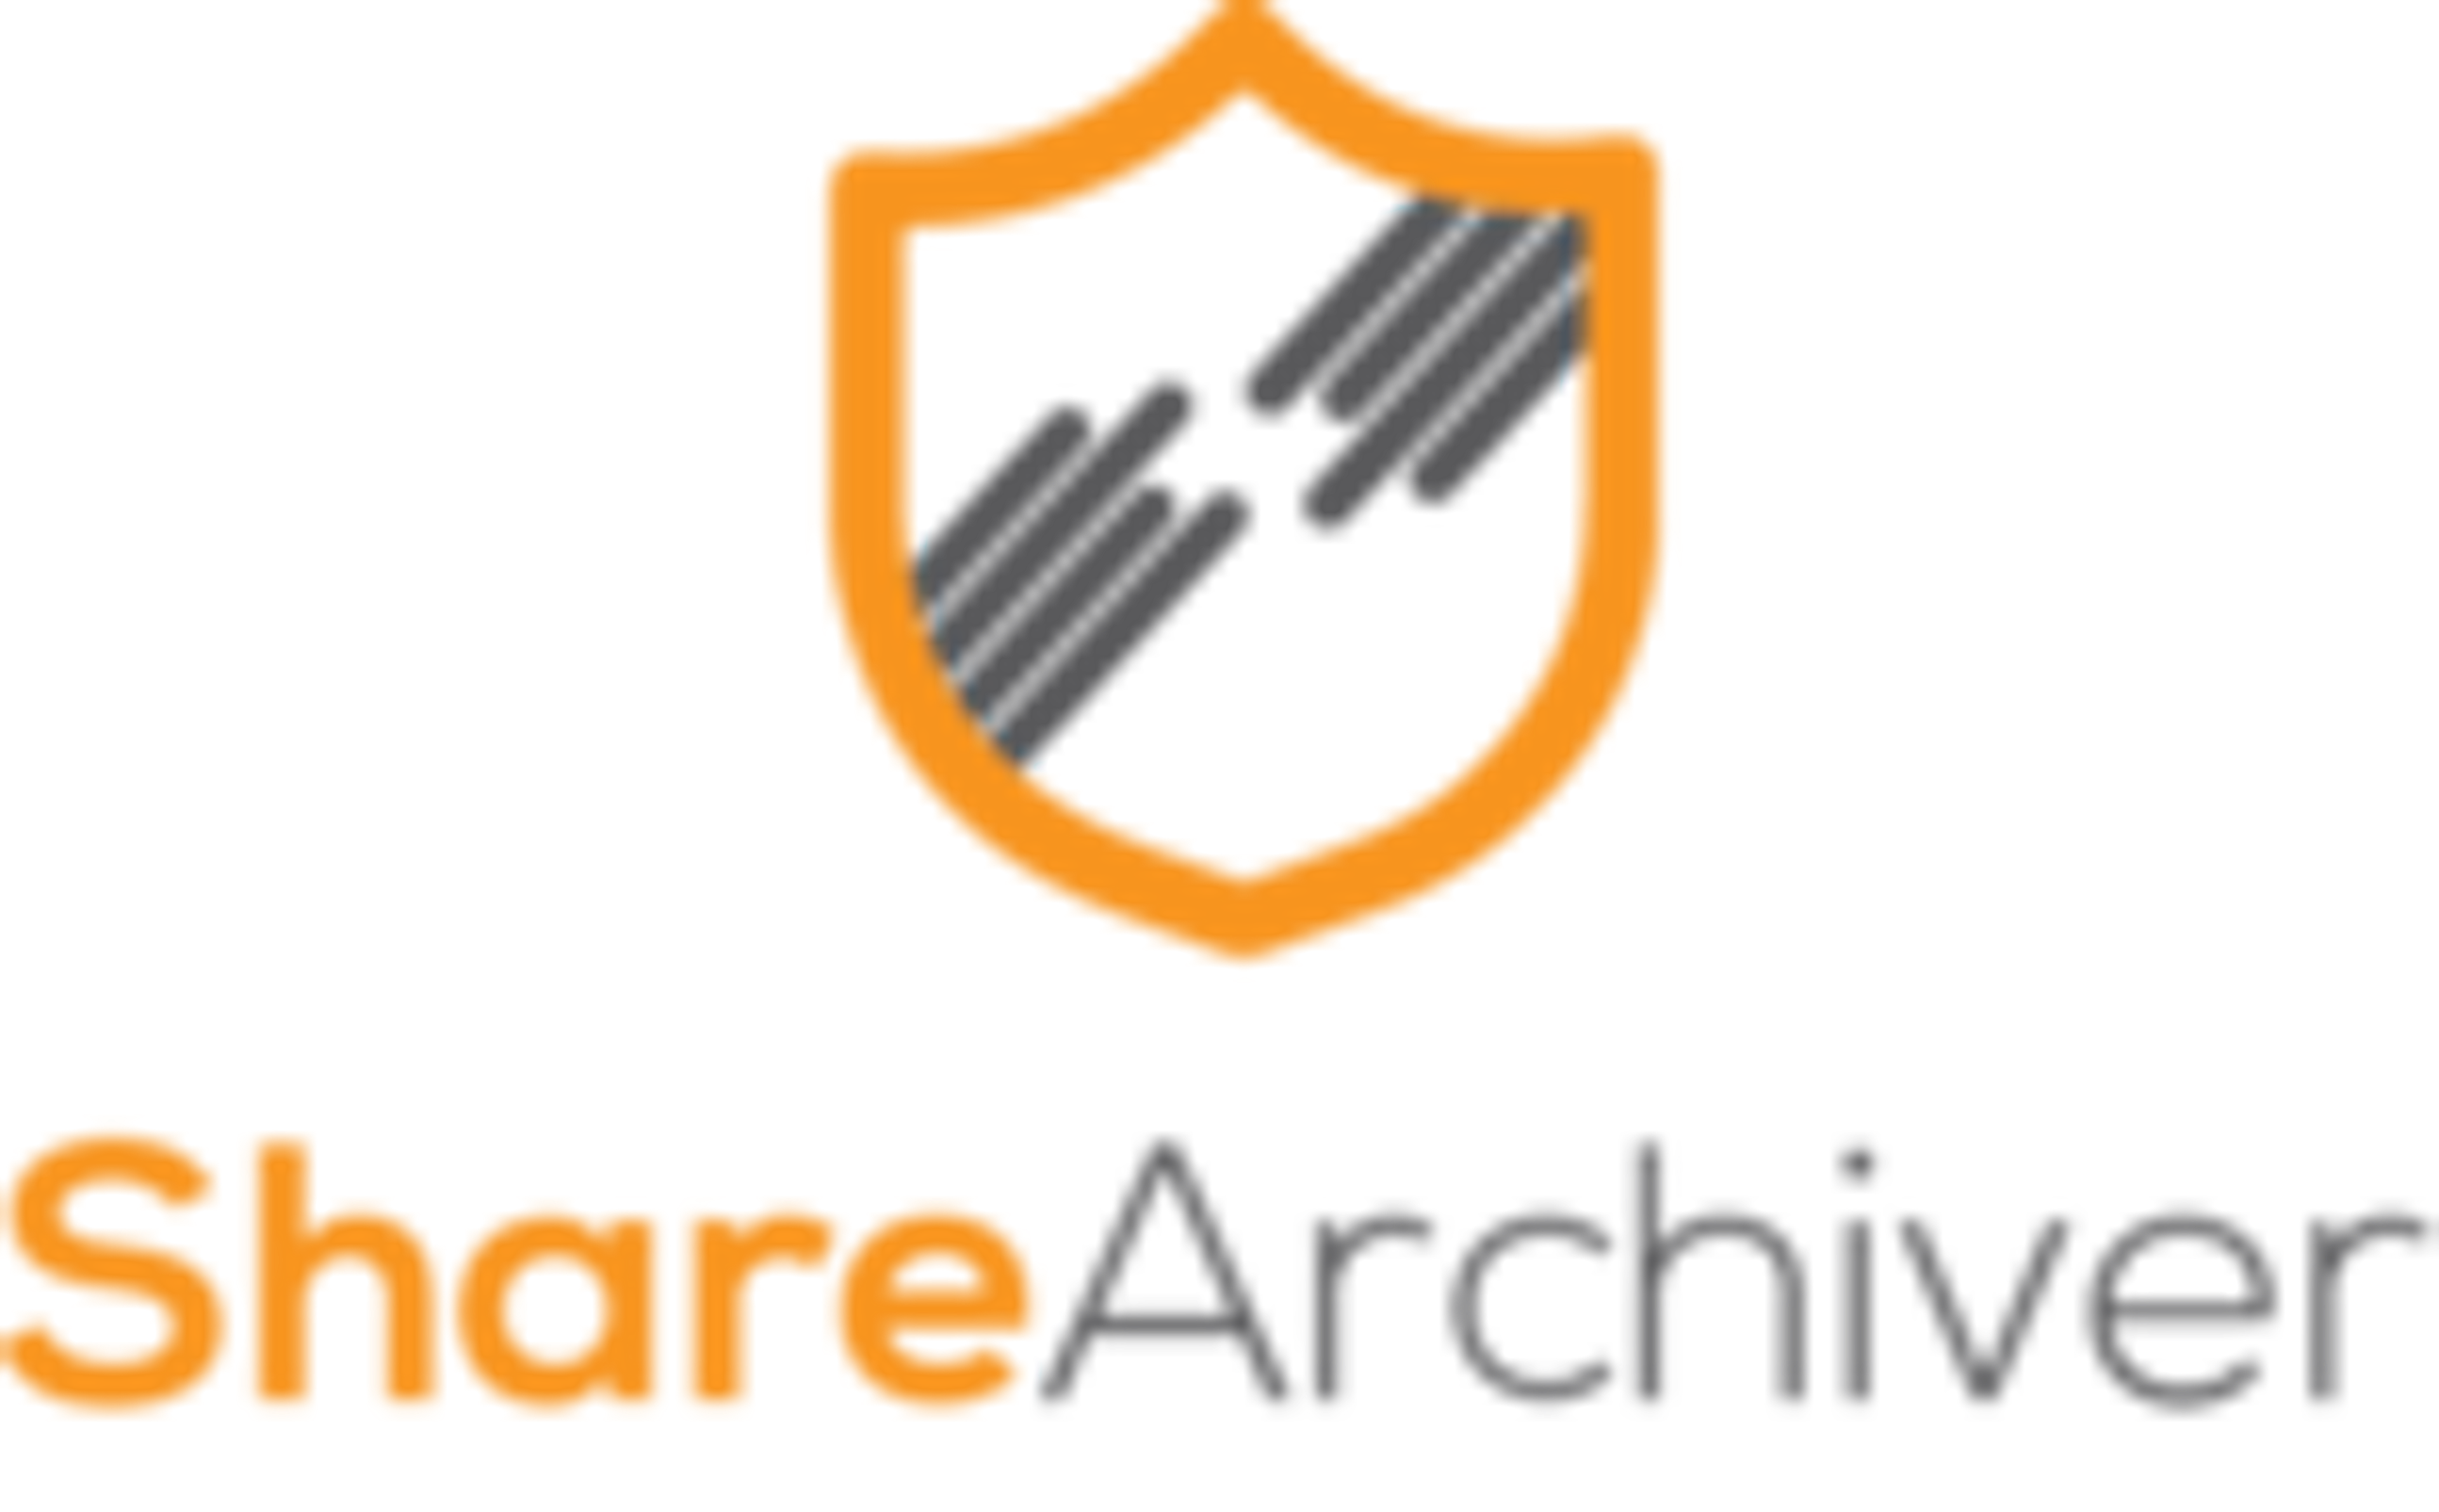 ShareArchiver Logo